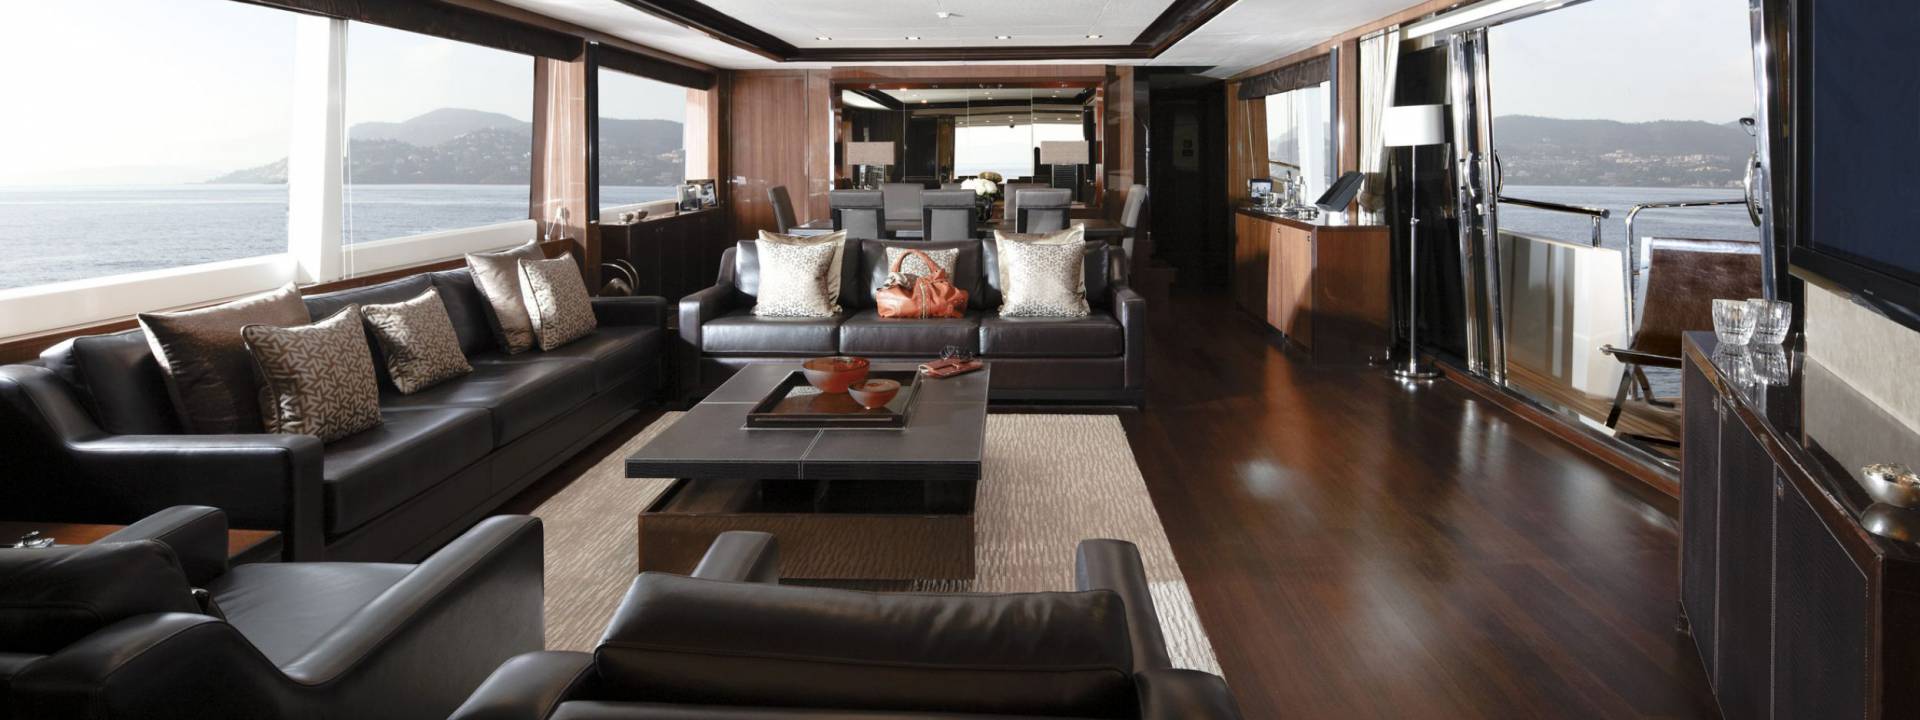 Luxury Yacht Living Room, Yvette Taylor London